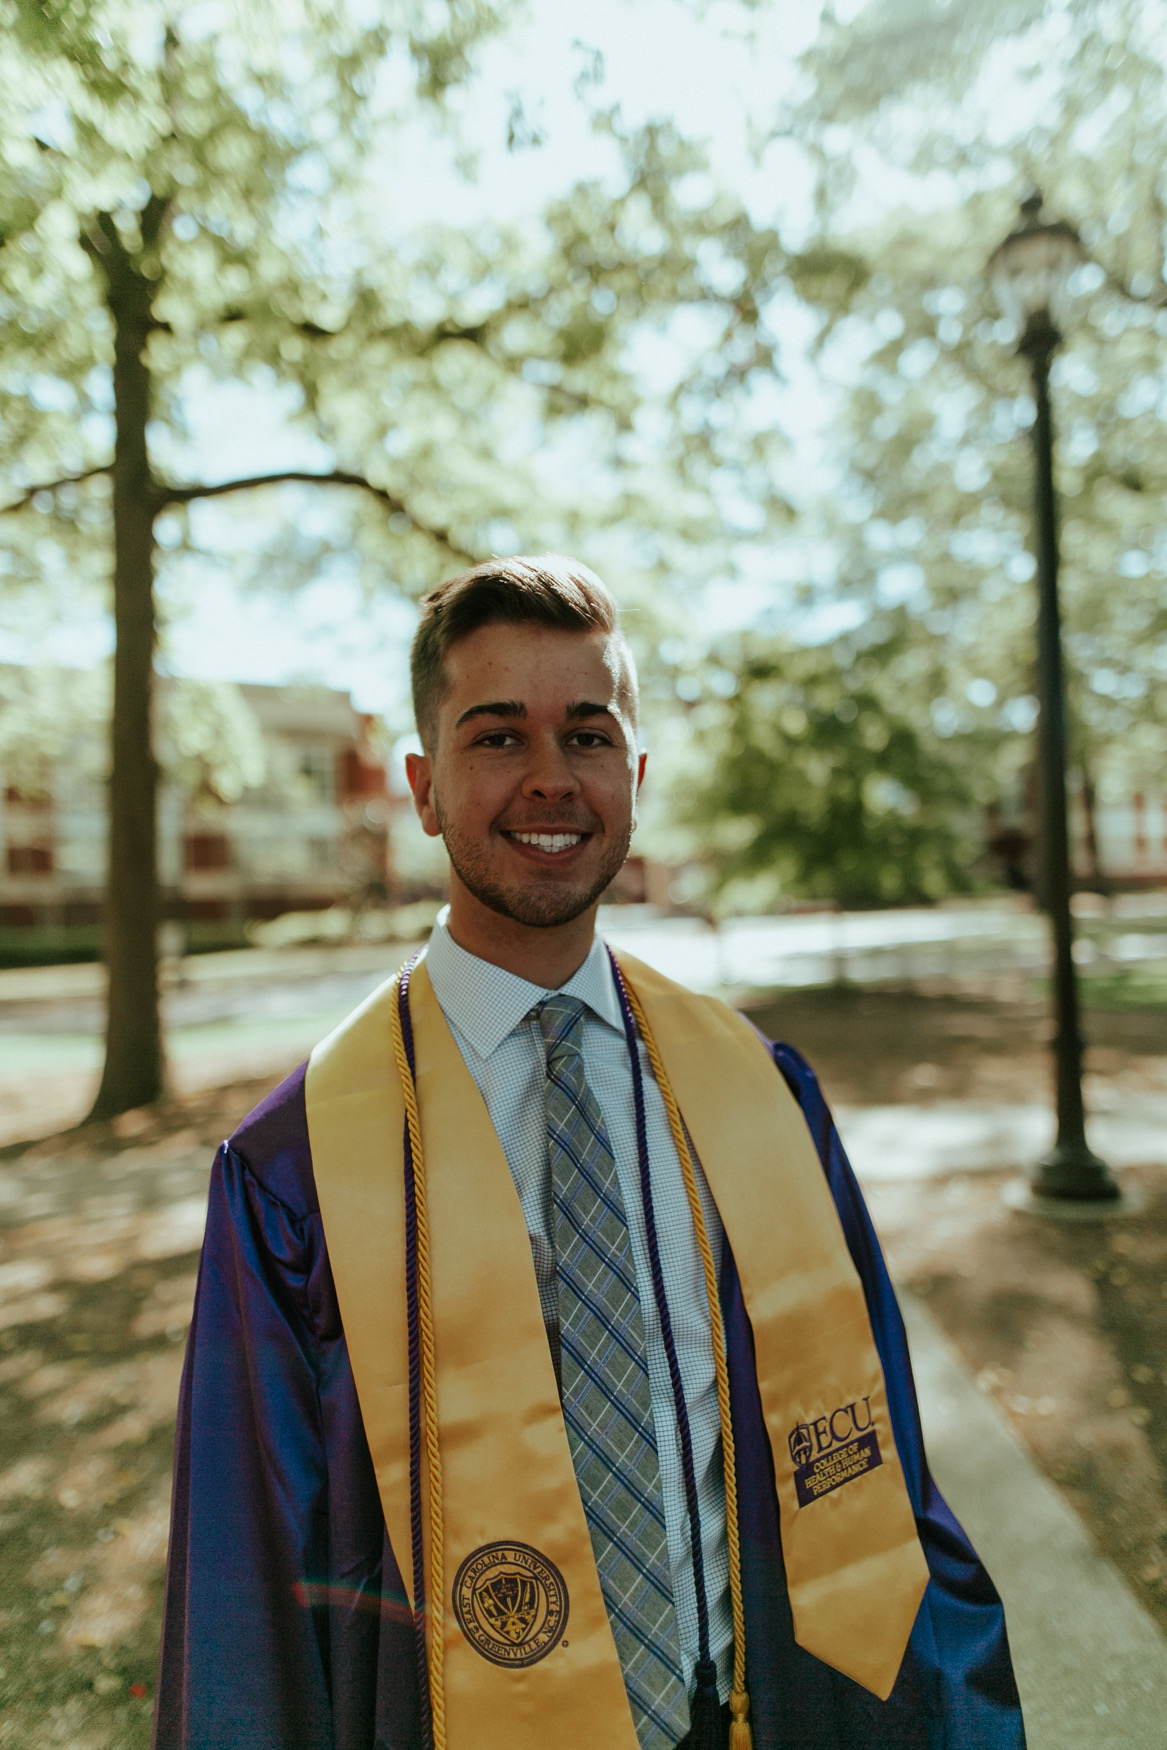 Kenan pictured in graduation regalia from East Carolina University